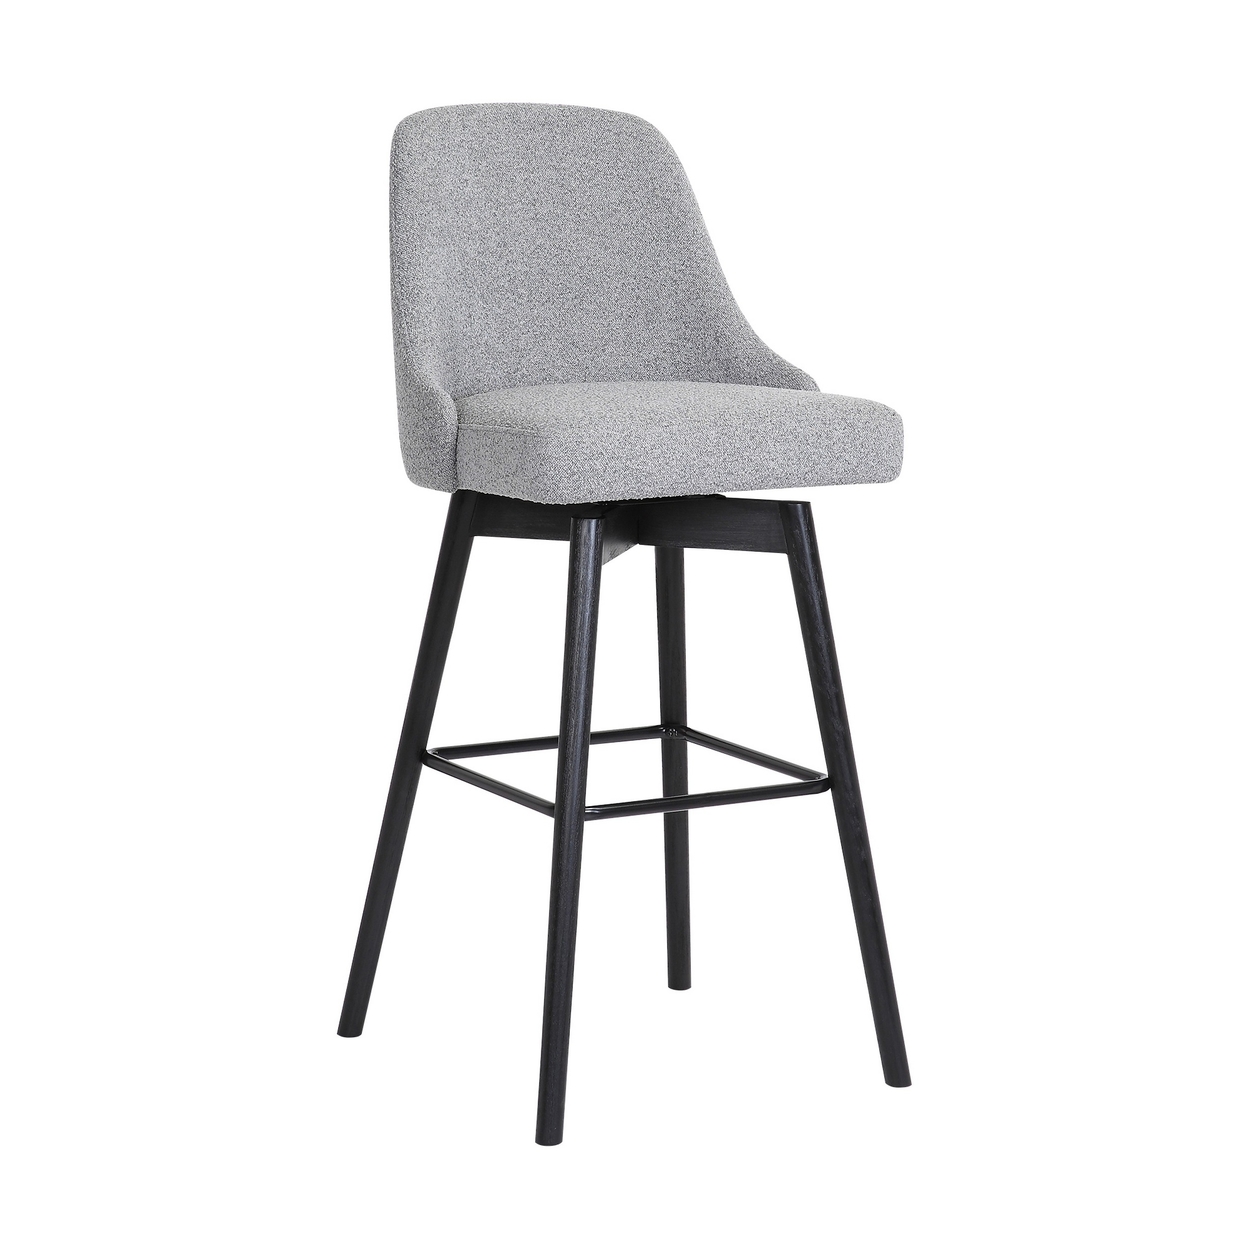 Sean 30 Inch Barstool Chair, Parson Style, Swivel, Light Gray Fabric, Black - Saltoro Sherpi